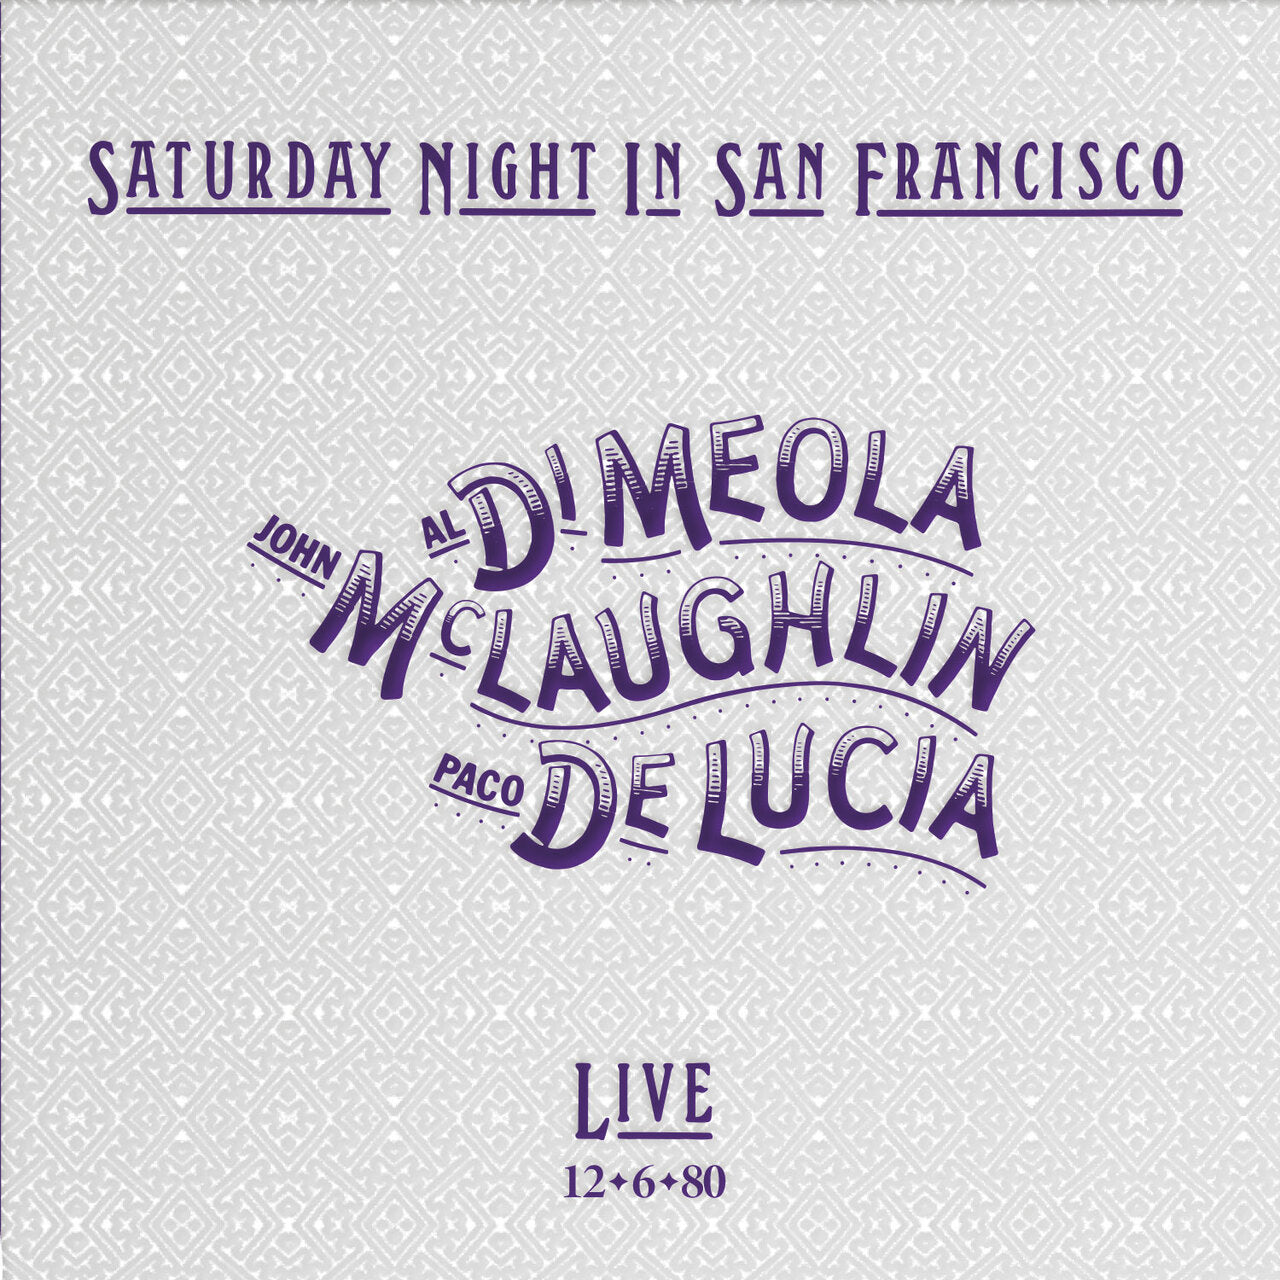 Al Di Meola, John McLaughlin &amp; Paco DeLucia - Saturday Night In San Francisco - Impex 33rpm LP 